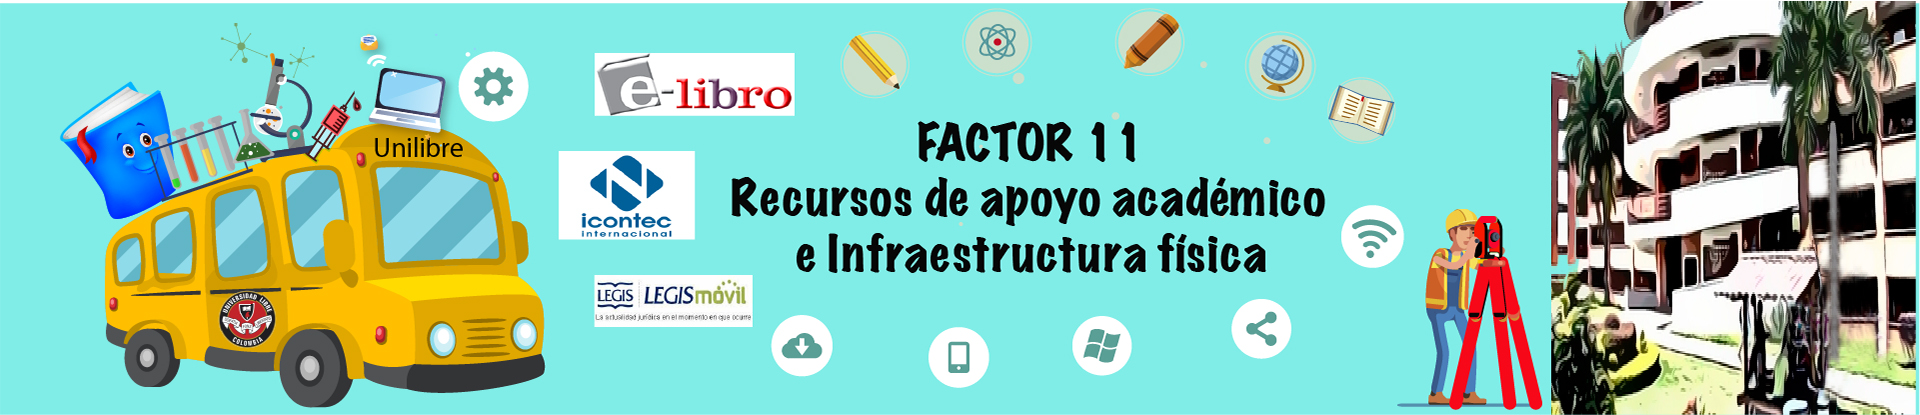 Factor 11